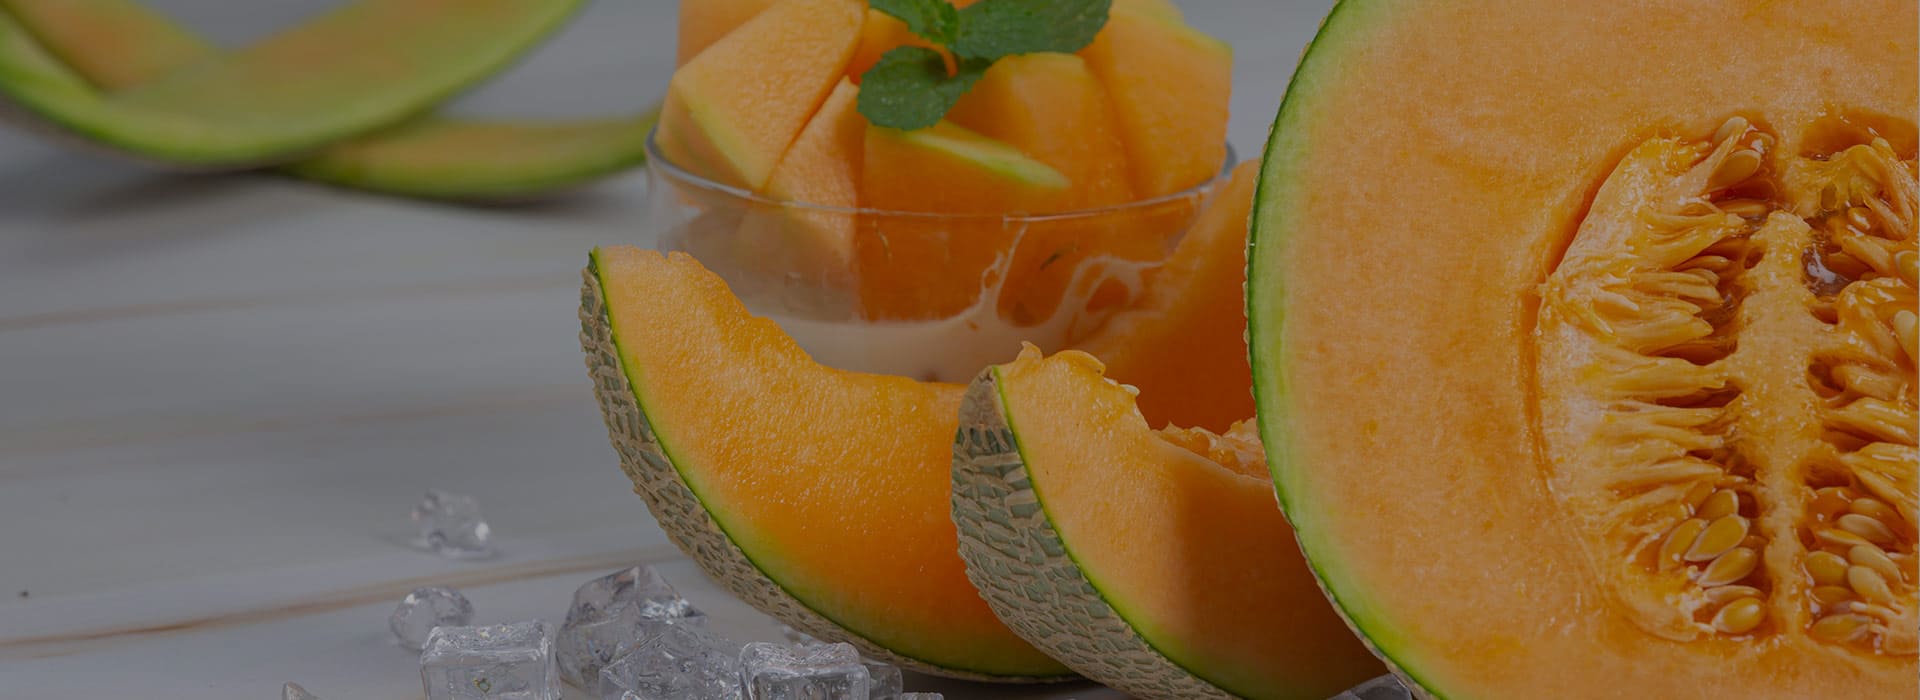 melon sodea fruit Tunisie